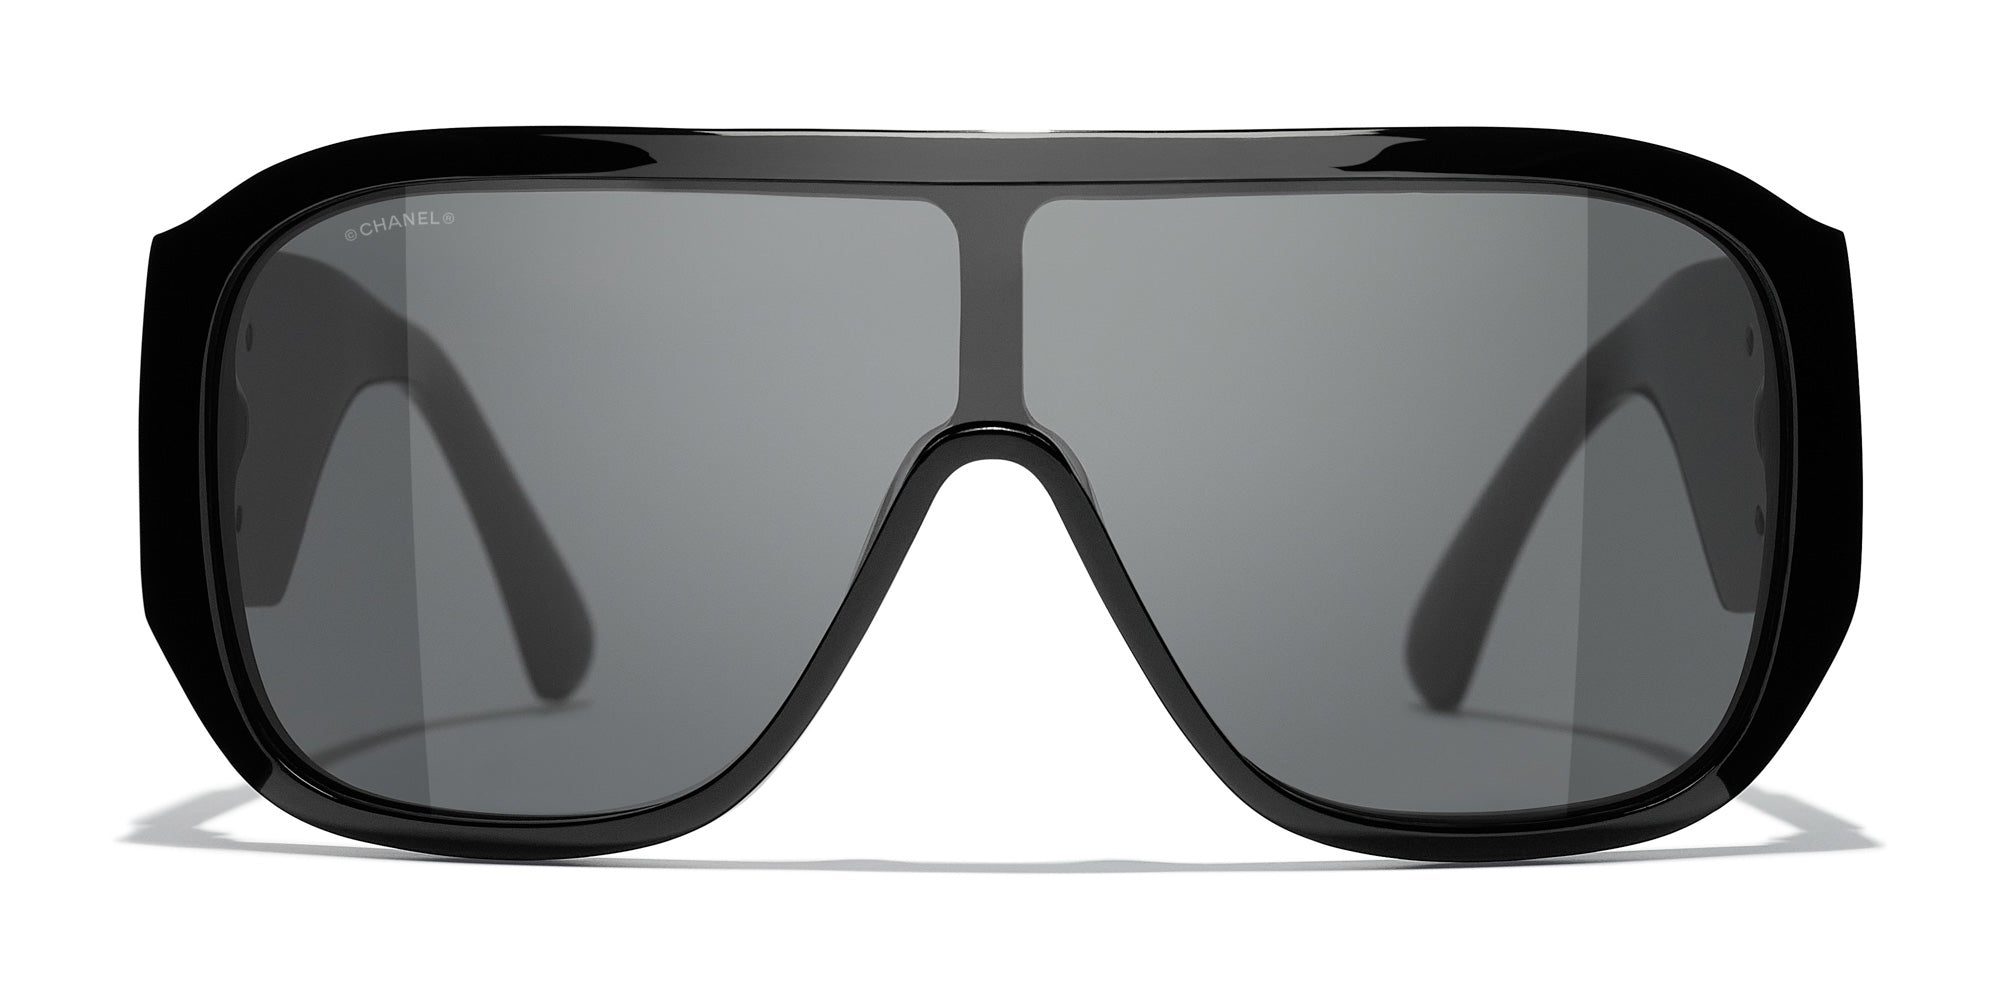 Chanel Shield Sunglasses - Acetate, Black - Polarized - UV Protected - Women's Sunglasses - 9115 C622/S4